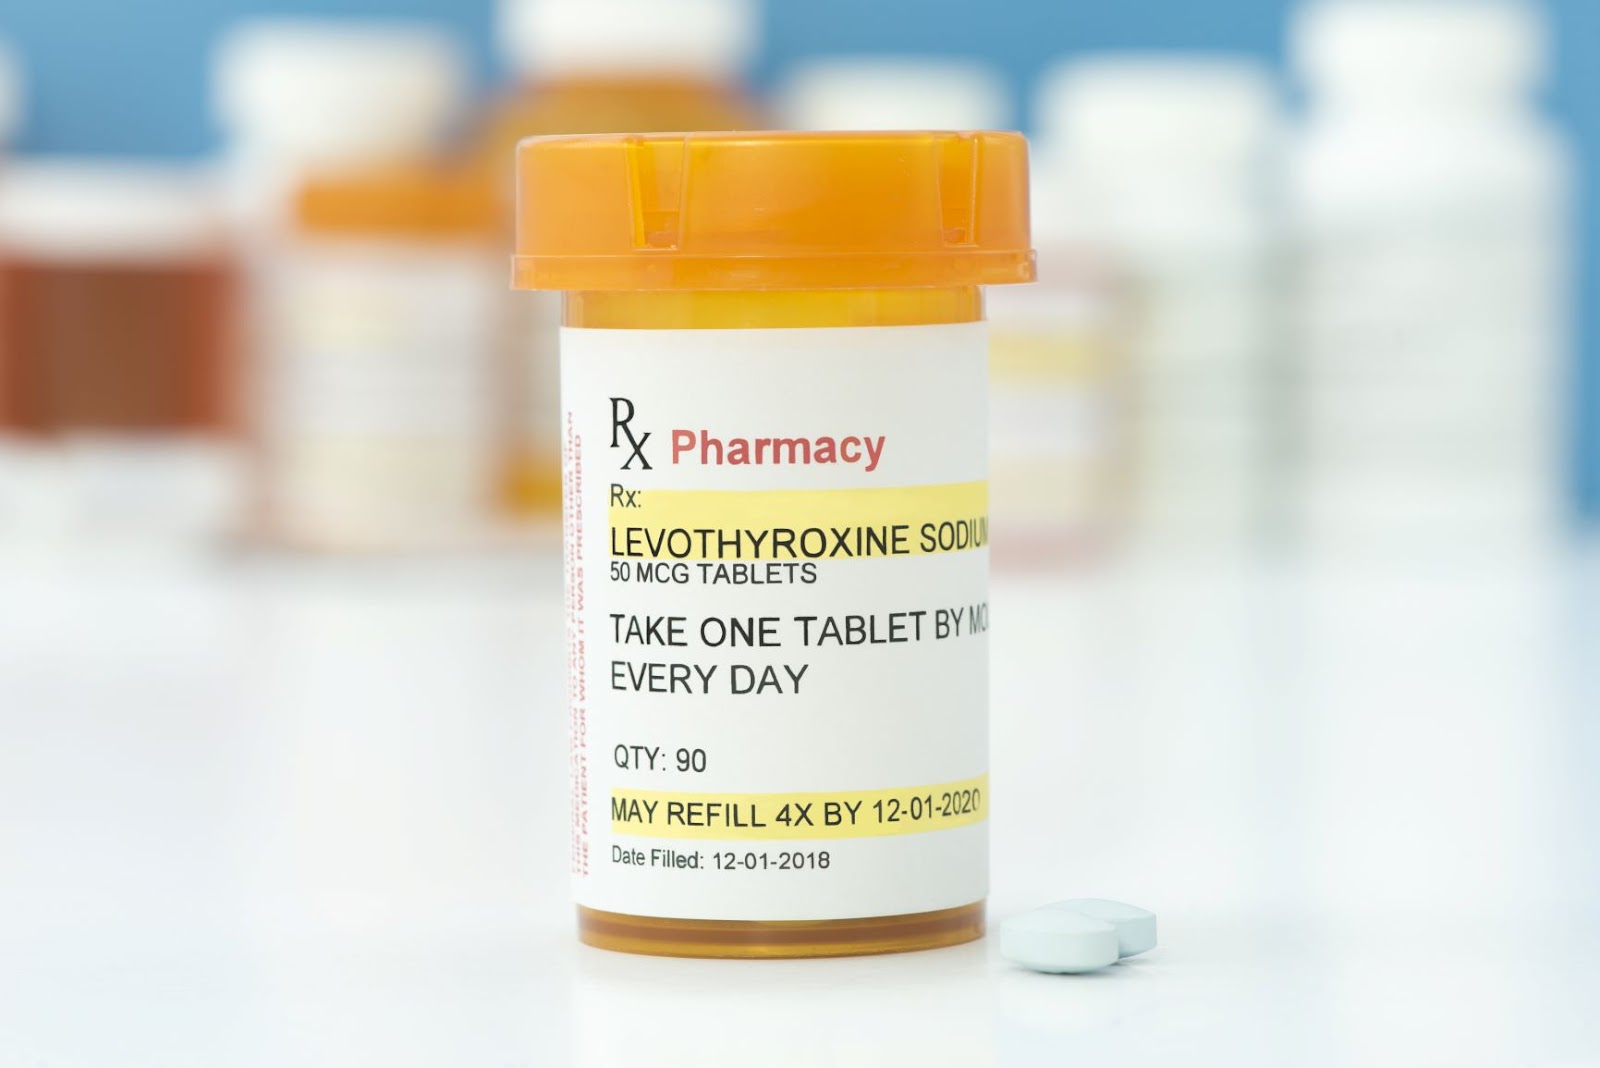 hypothyroidism medication: Levothyroxine tablets in a plastic medicine container